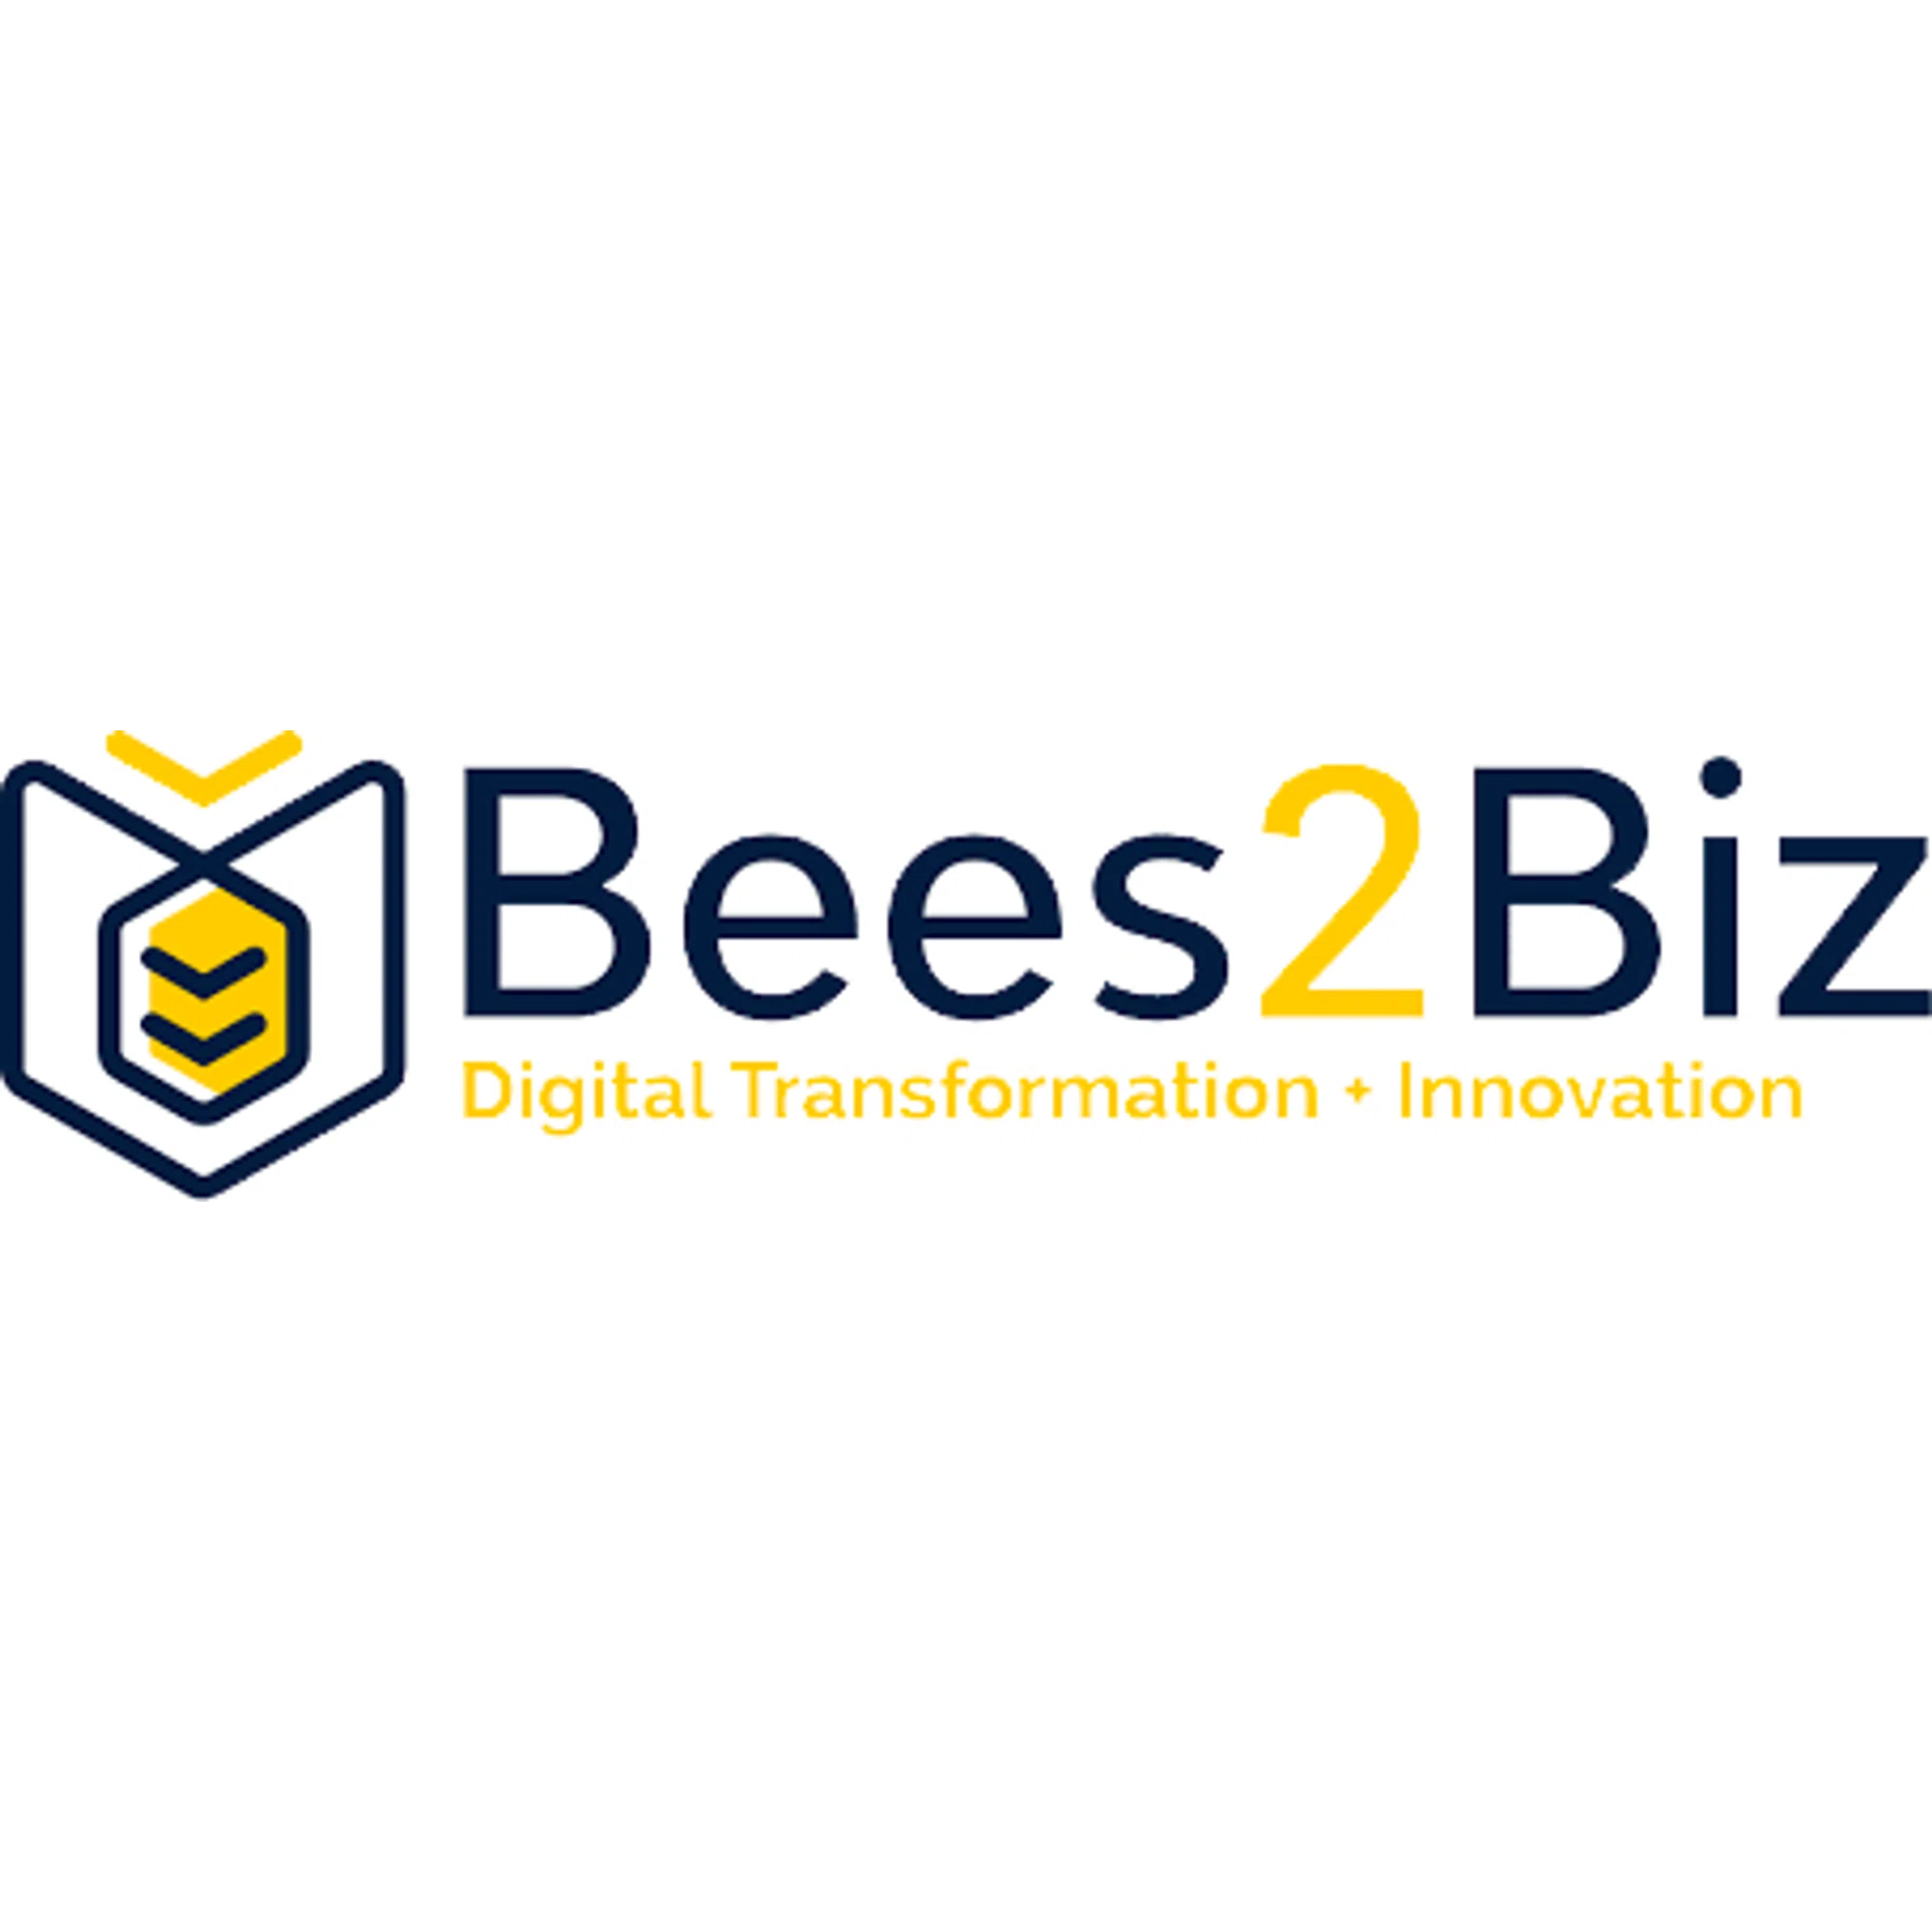 Bees2Biz